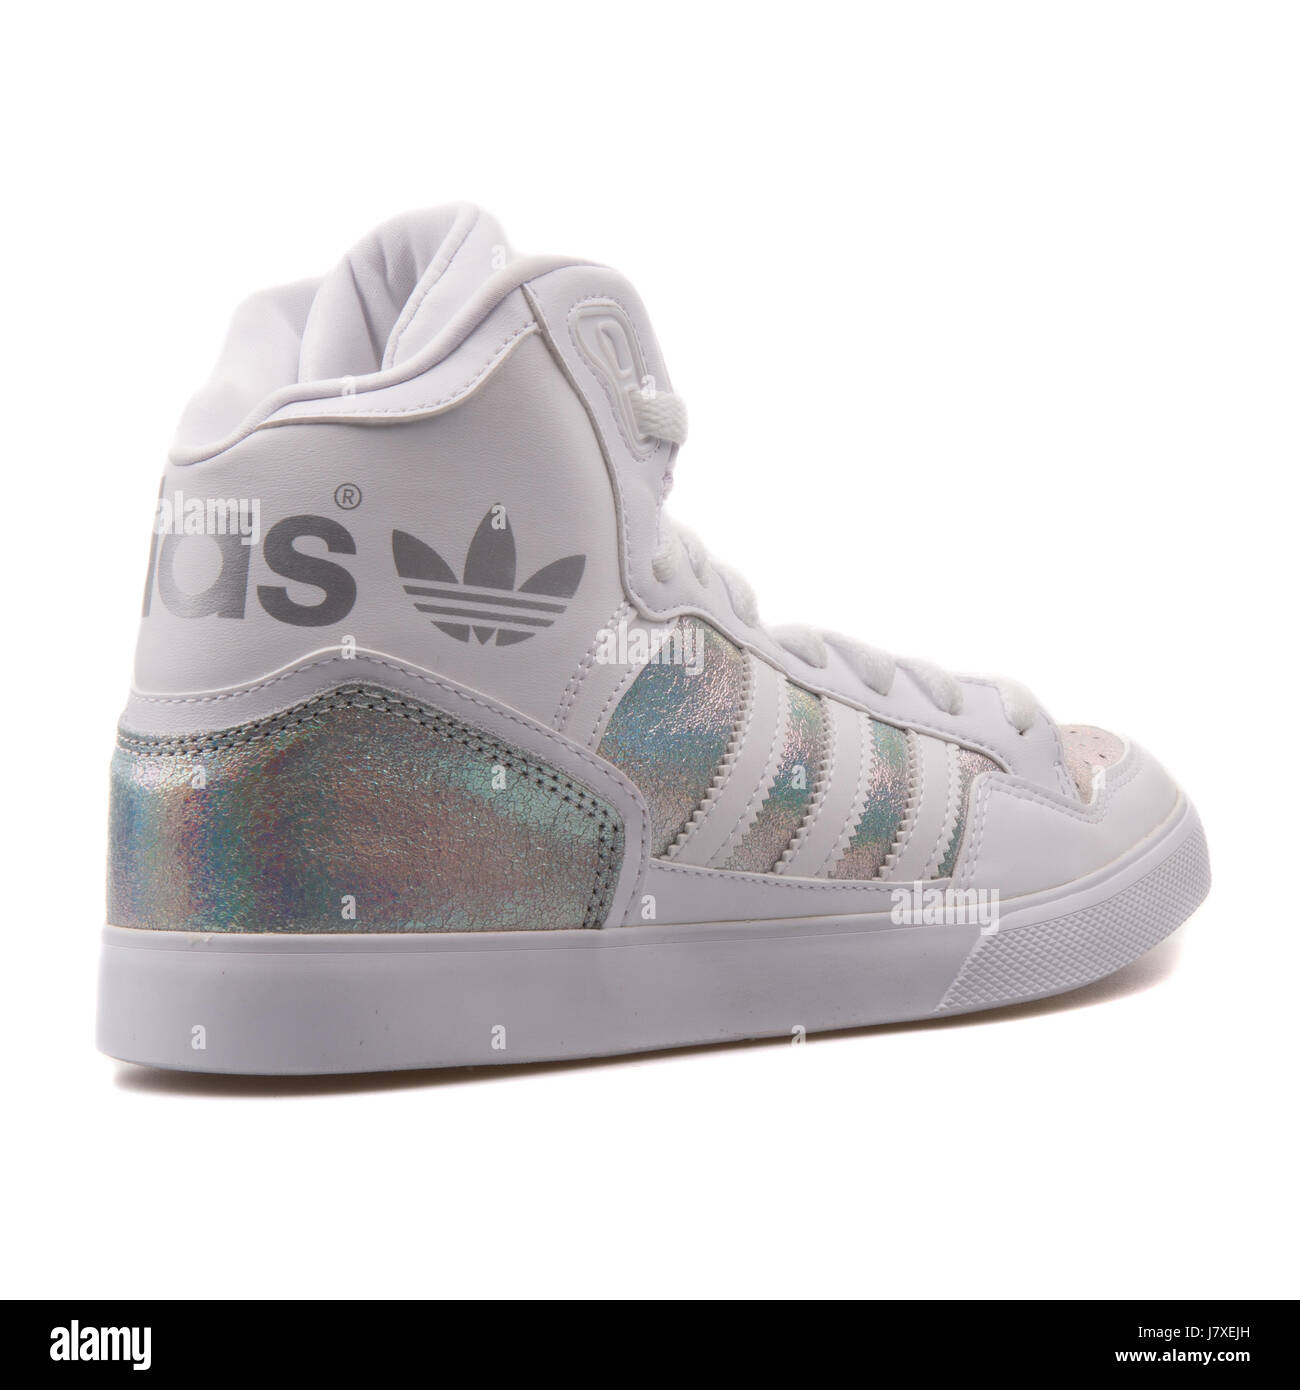 Adidas Extaball W Frauen irisierend weiß mit Metallic-Silber Leder Sneakers  - S77398 Stockfotografie - Alamy